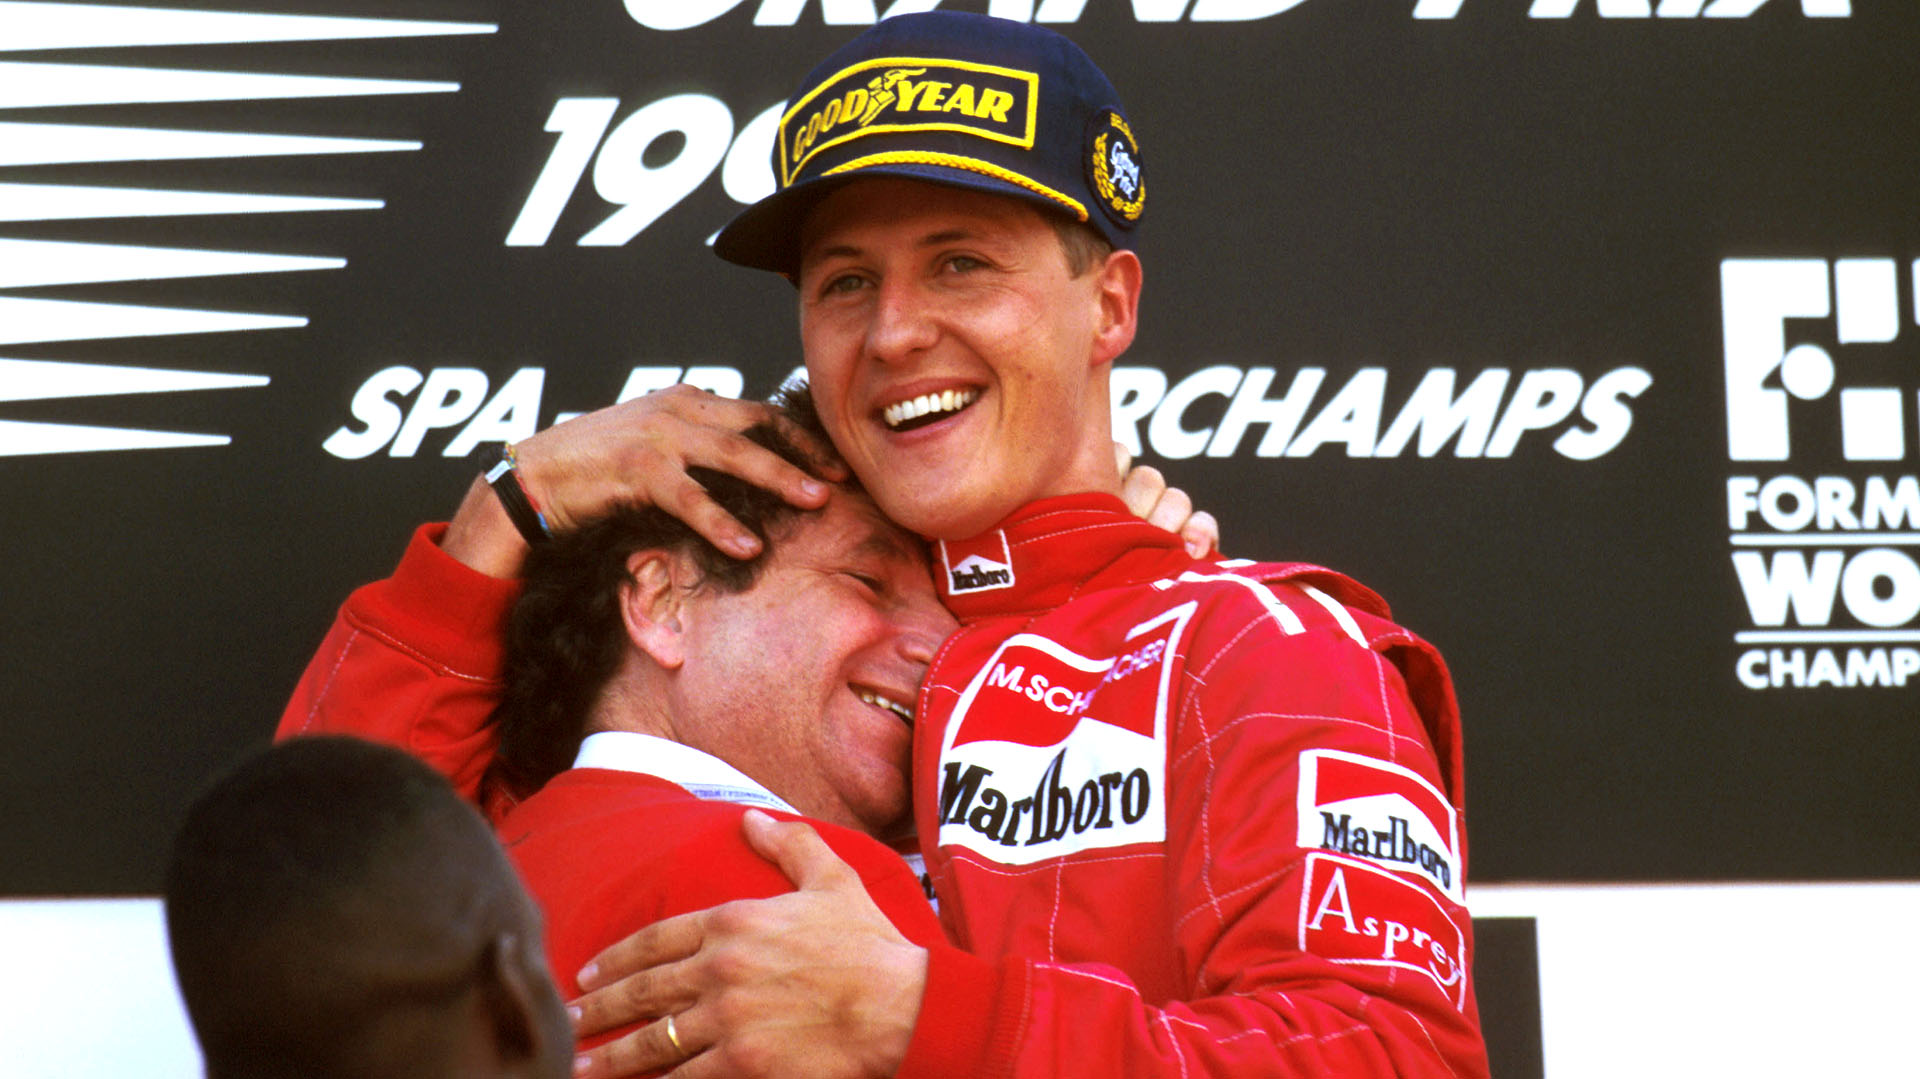 Todt is the former team principal of Scuderia Ferrari Formula 1 team.